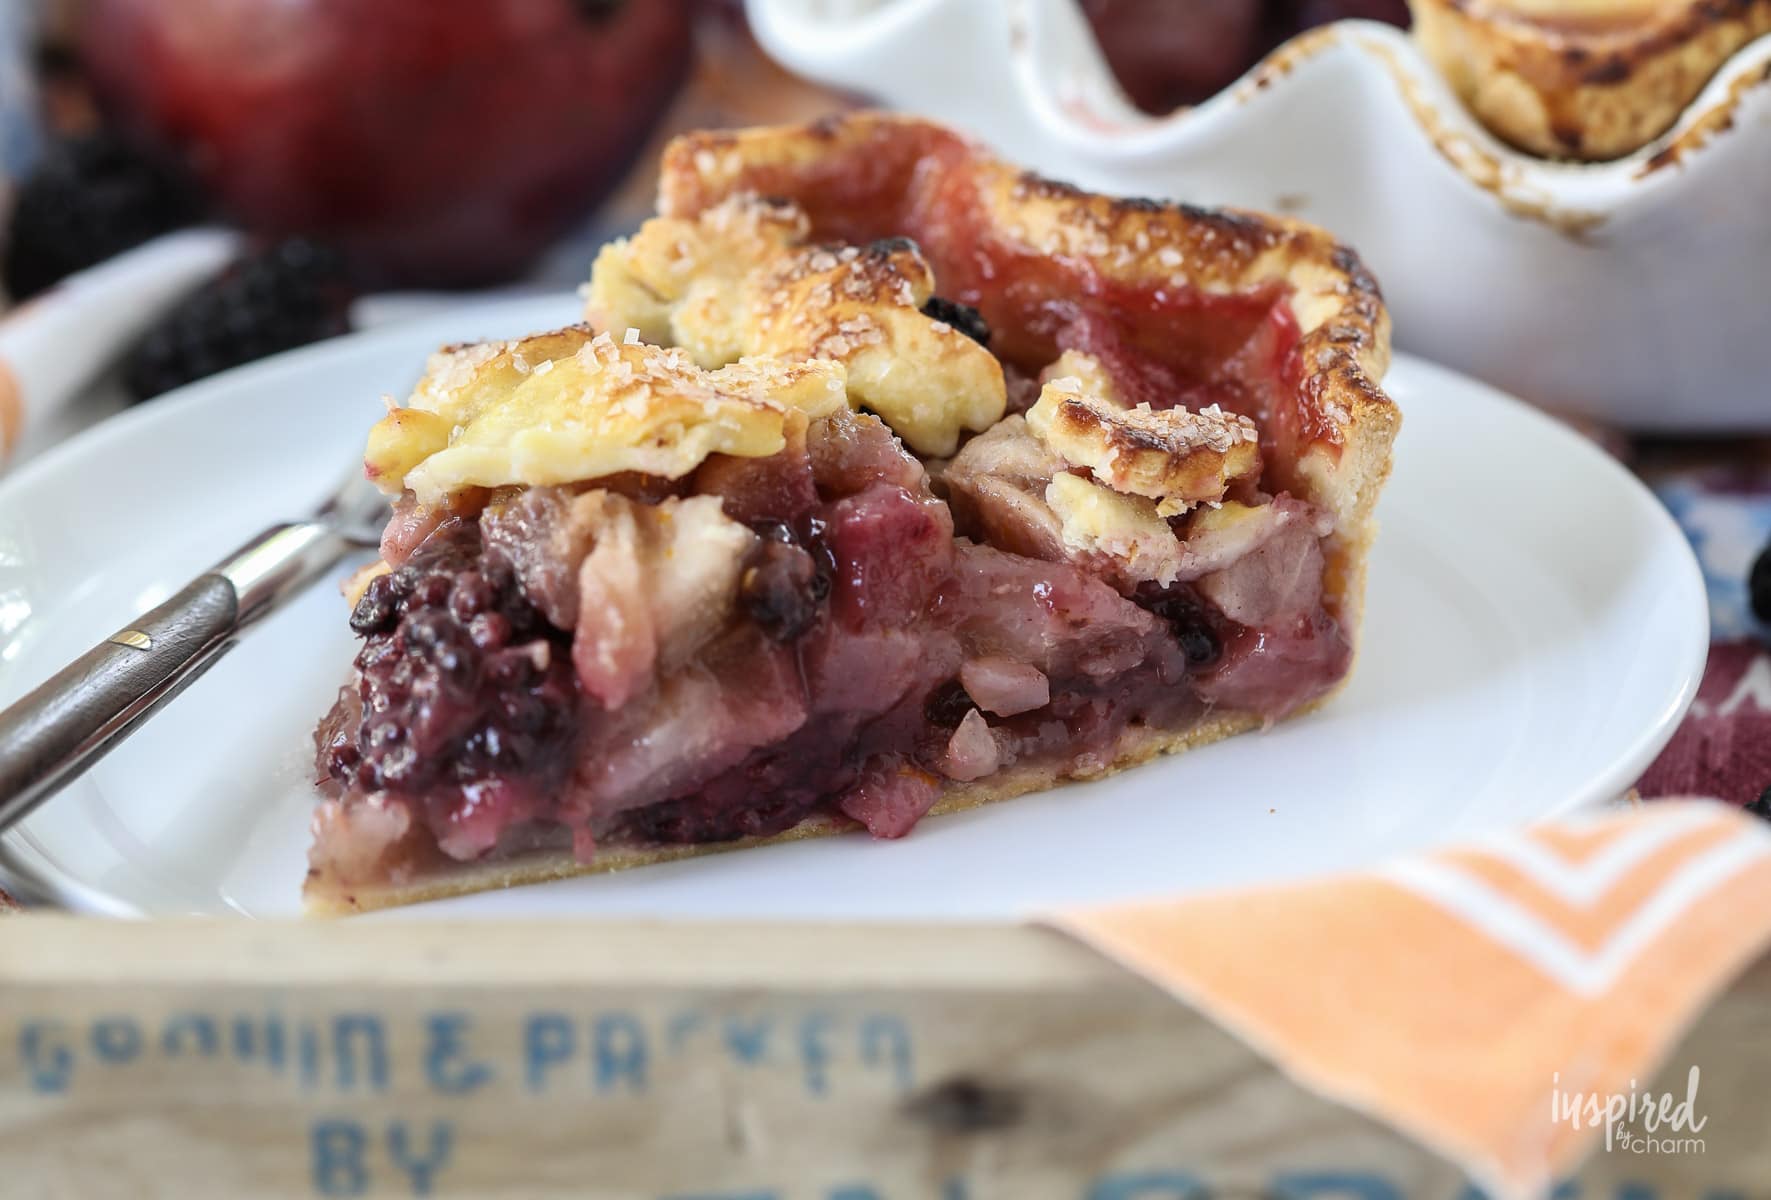 This Blackberry Pear Pie is the perfect summer meets fall dessert recipe. #blackberry #pie #pie #dessert #fallbaking #recipe